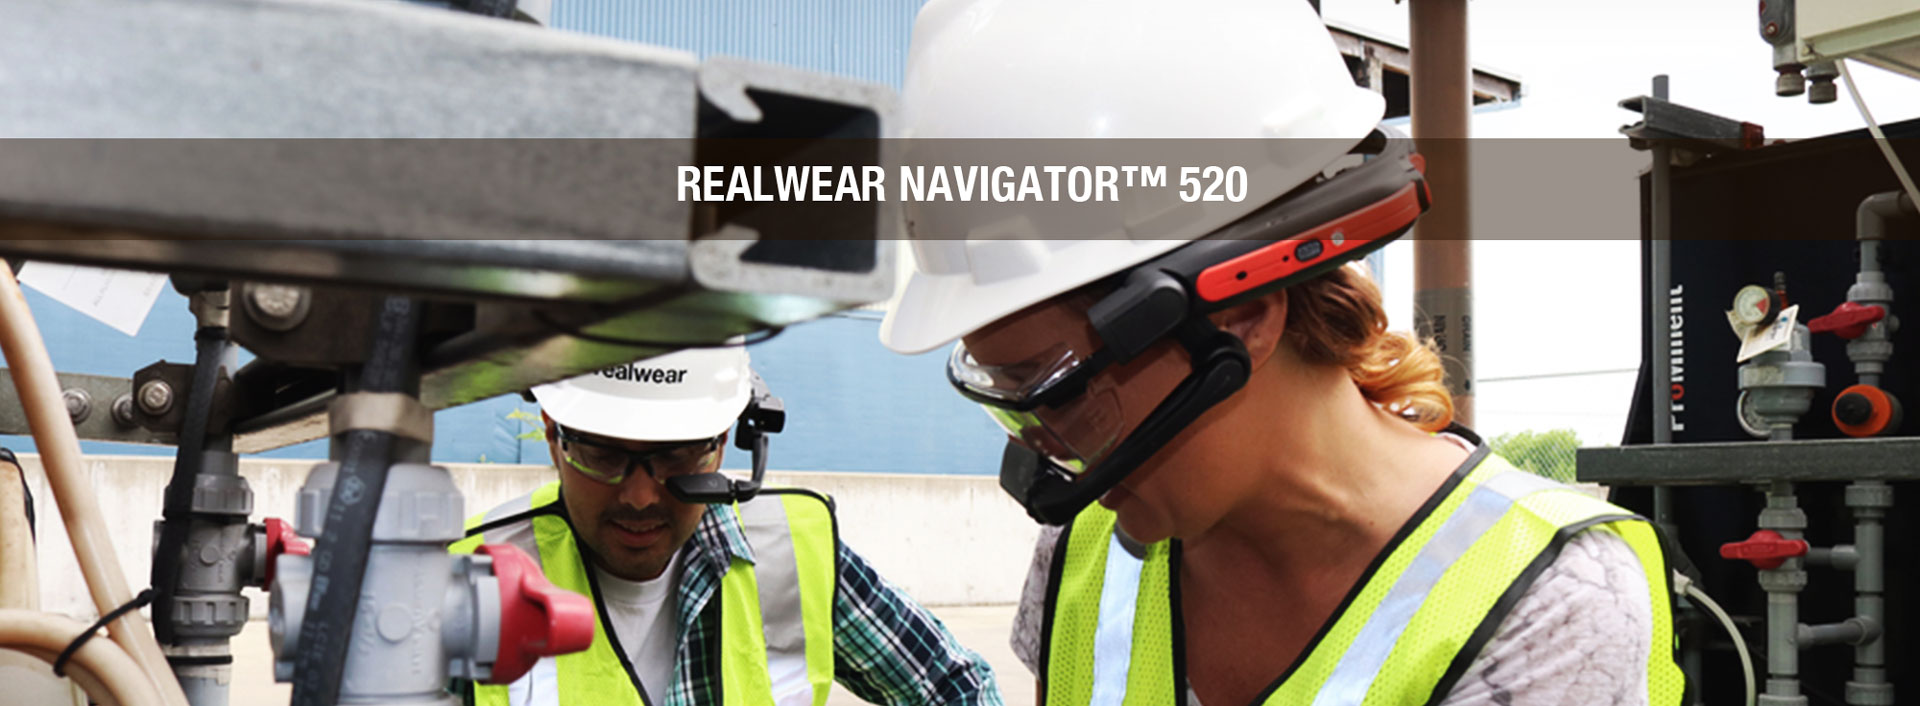 Realwear Navigator 520